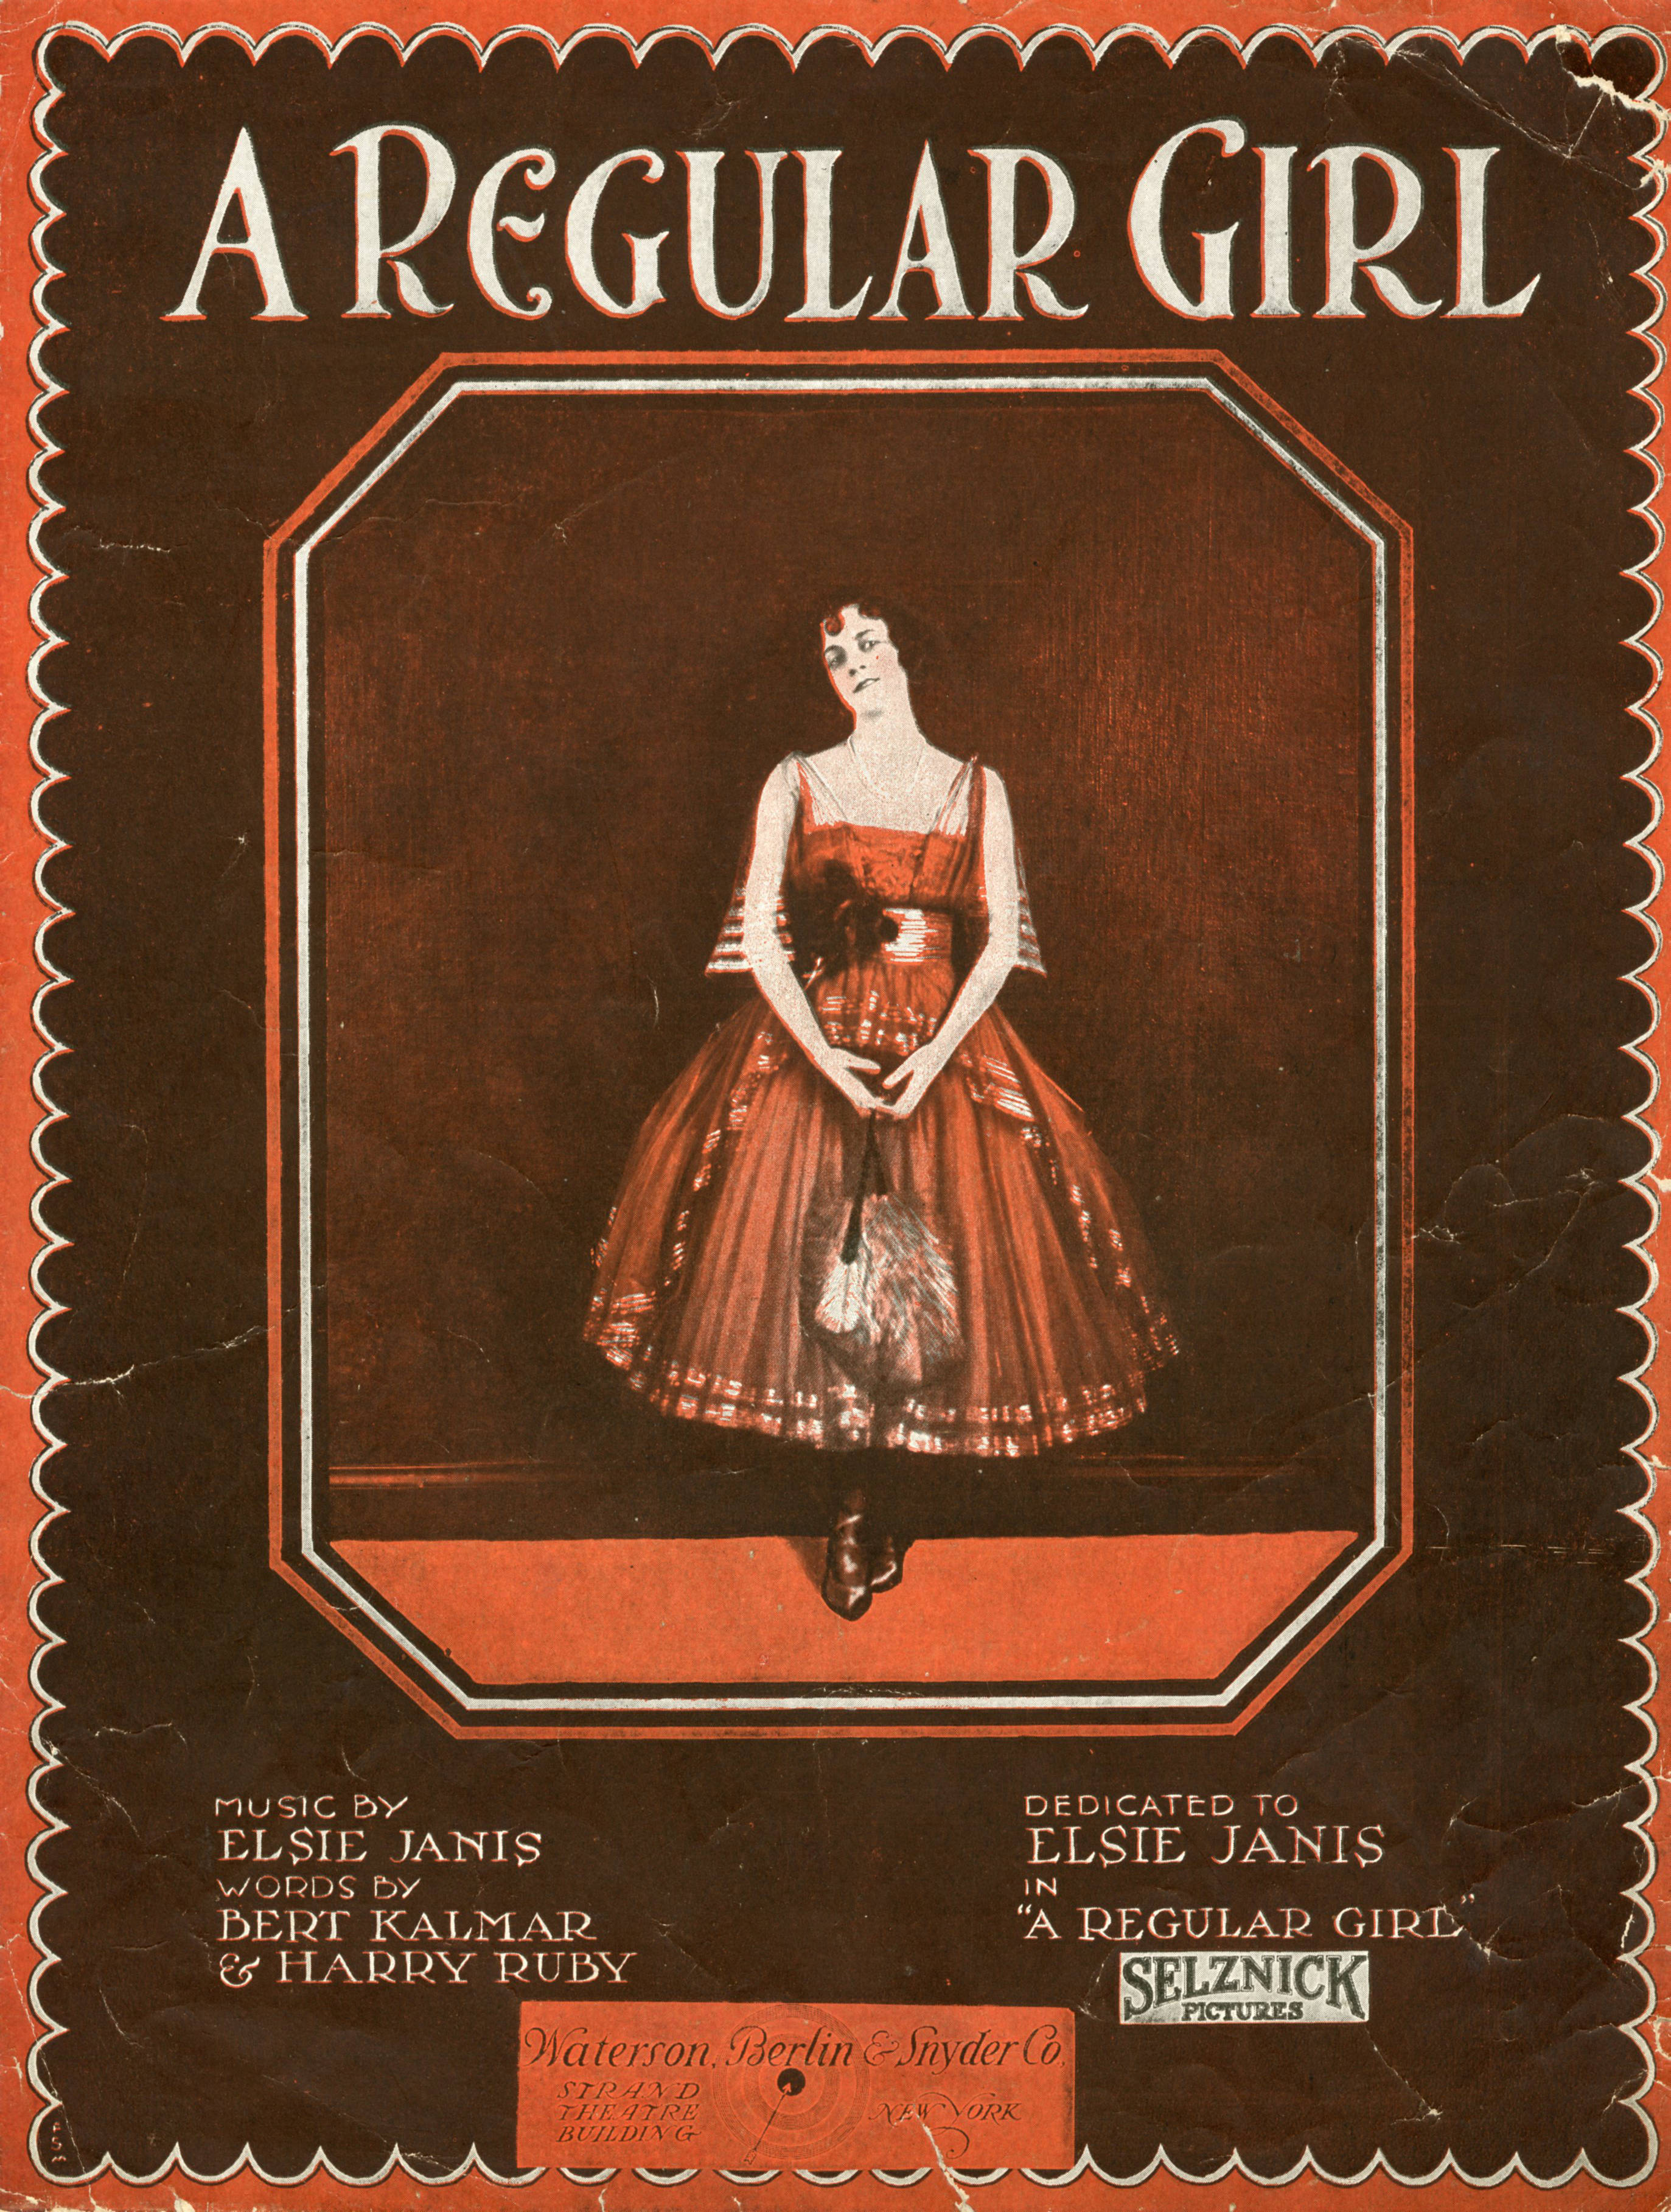 Sheet music cover - A REGULAR GIRL (1919)